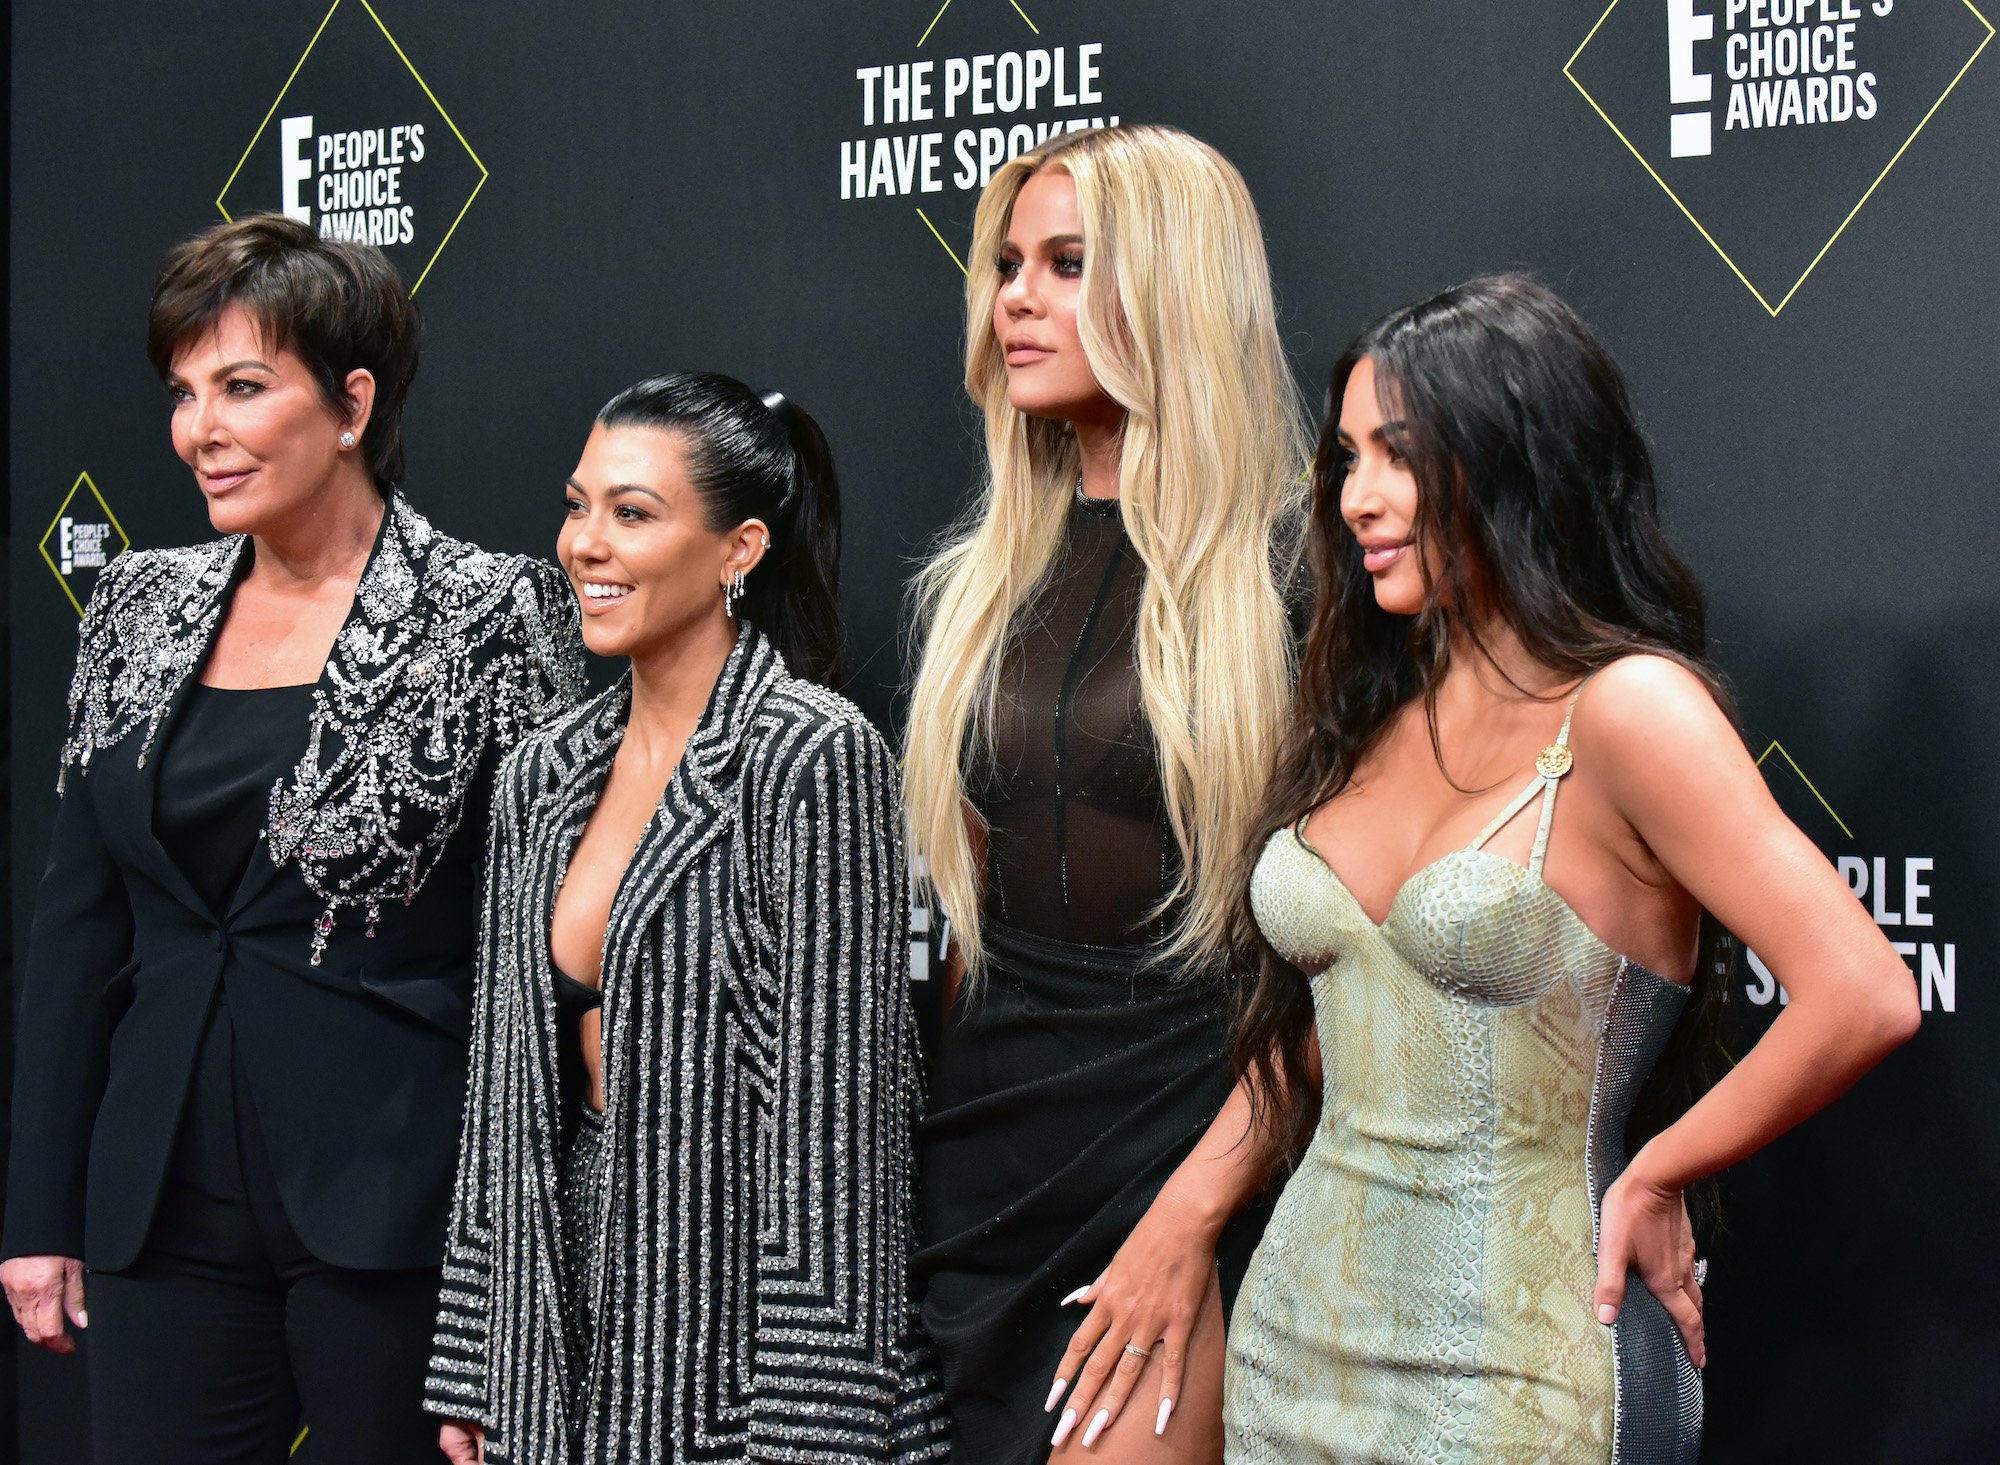 Kris Jenner, Kourtney Kardashian, Khloé Kardashian, and Kim Kardashian West